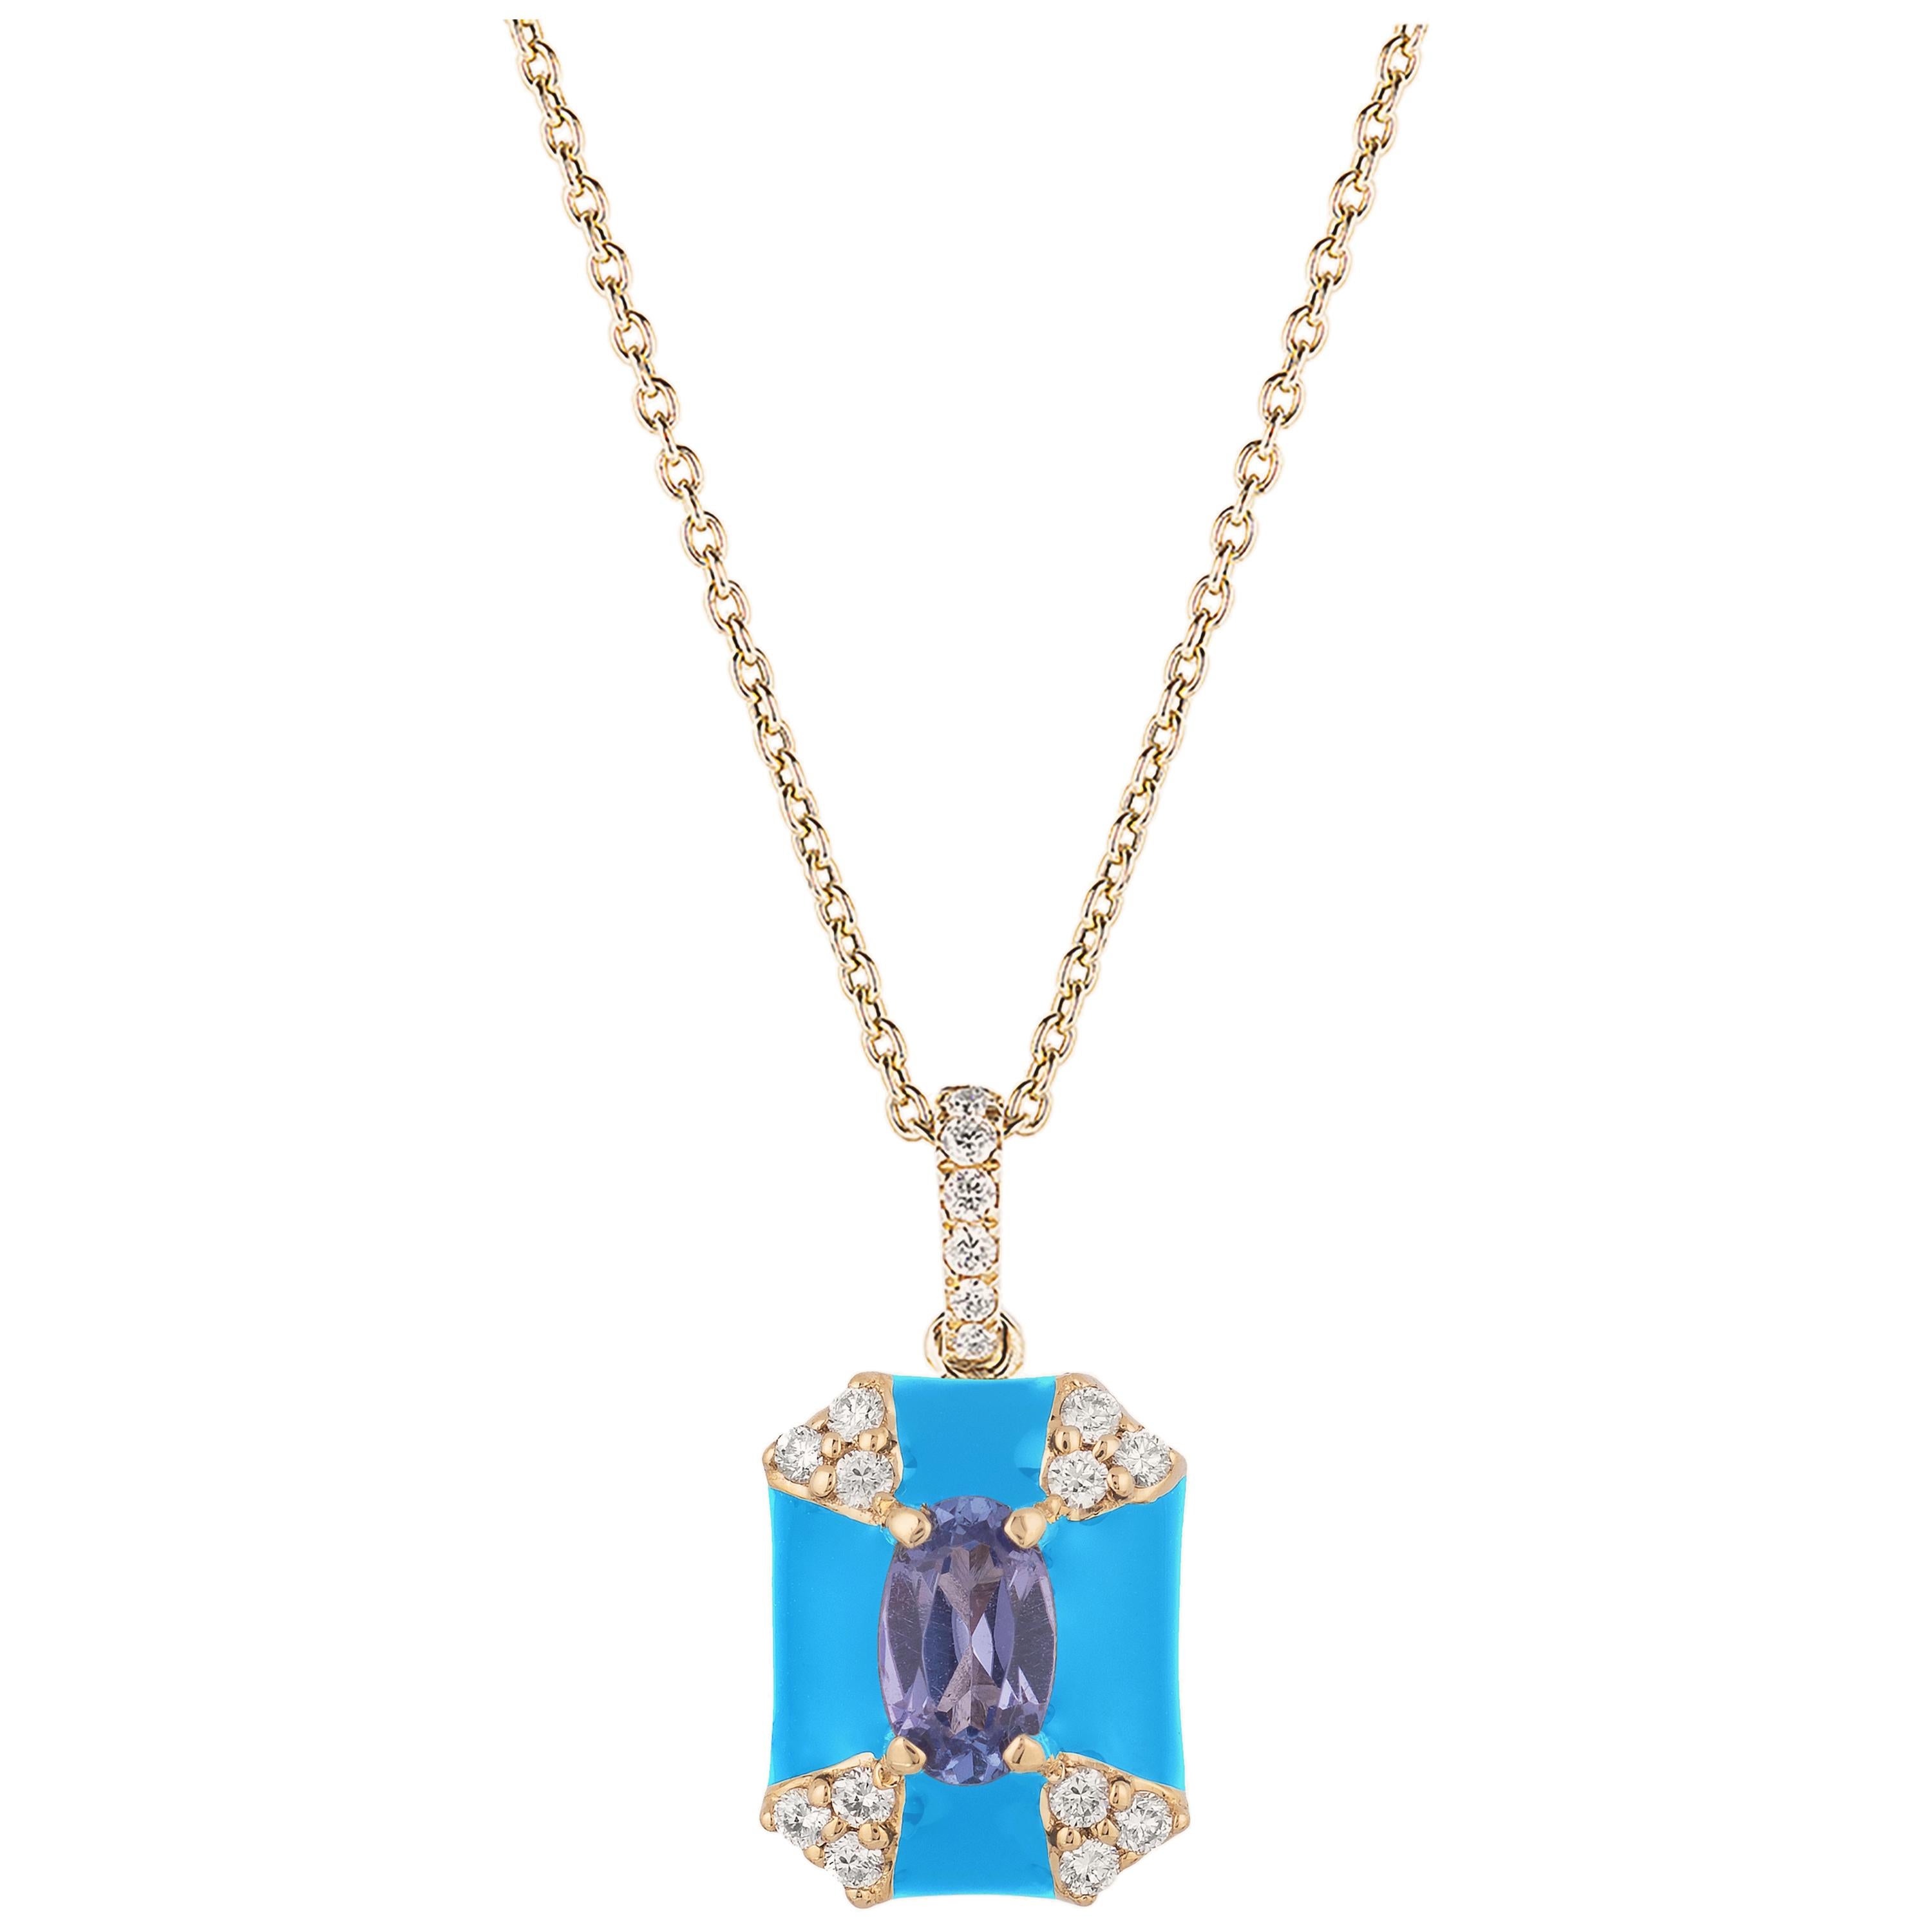 Pendentif Goshwara octogonal en émail turquoise, saphirs et diamants